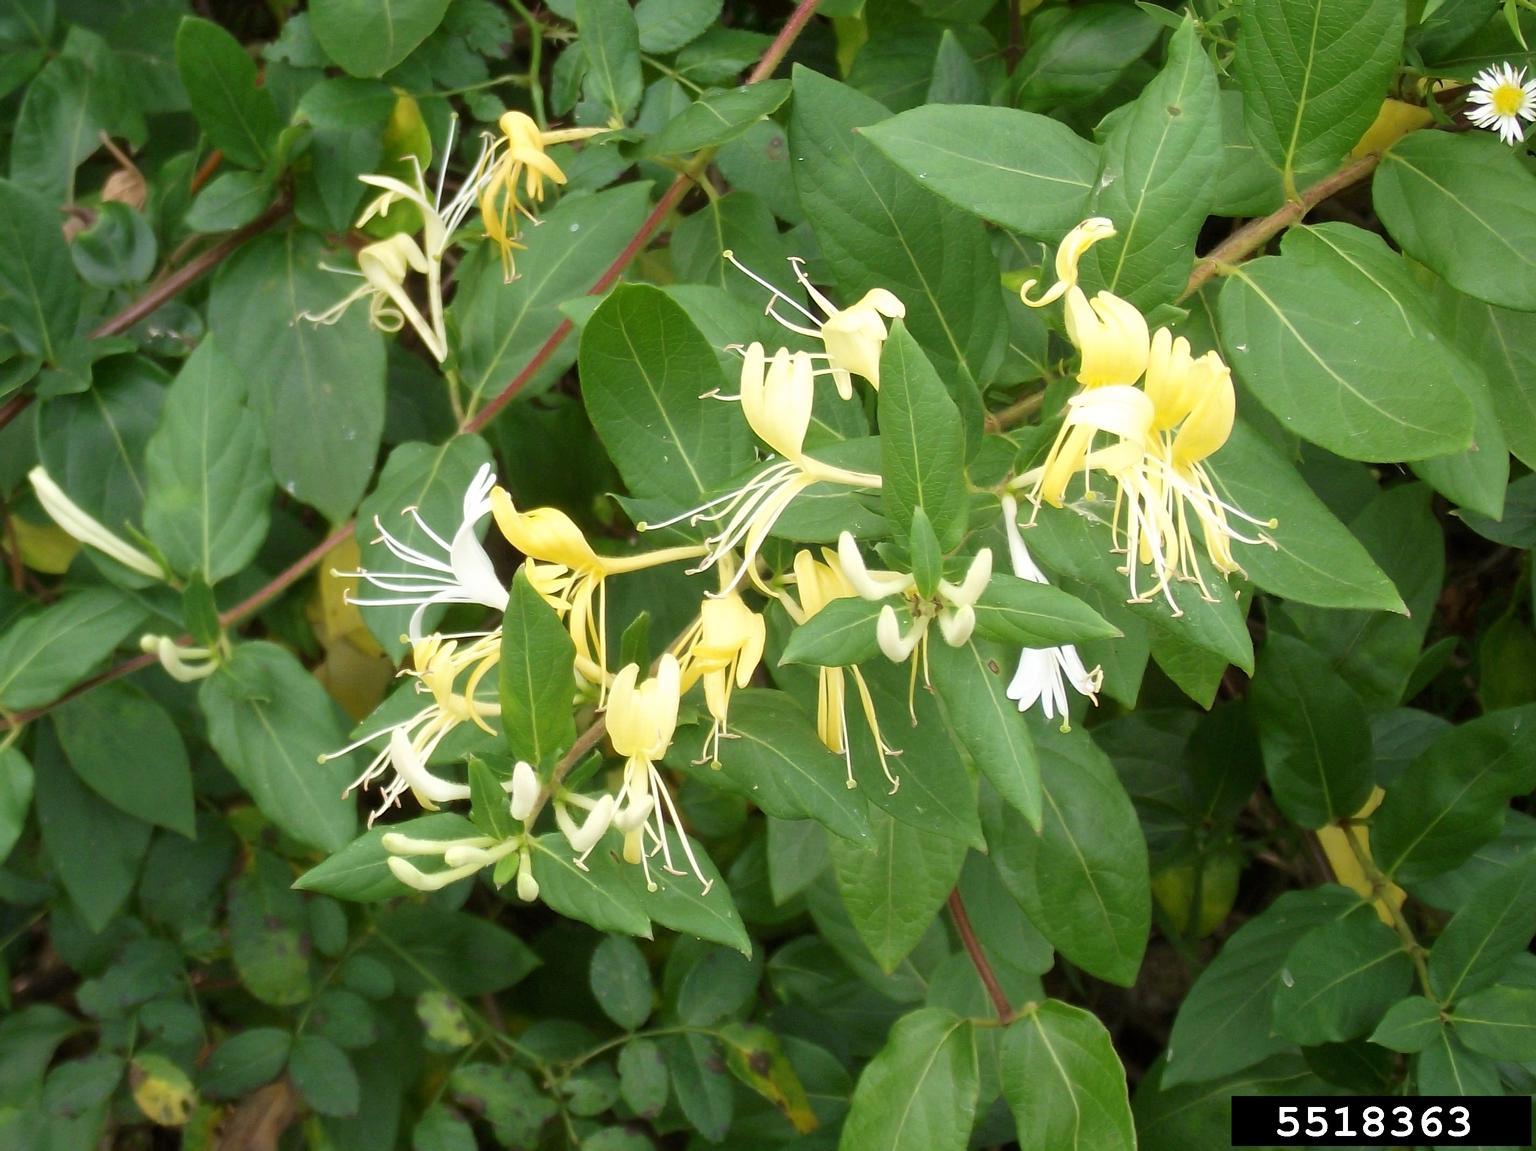 Invasive Japanese honeysuckle with white and creamy yellow flowers